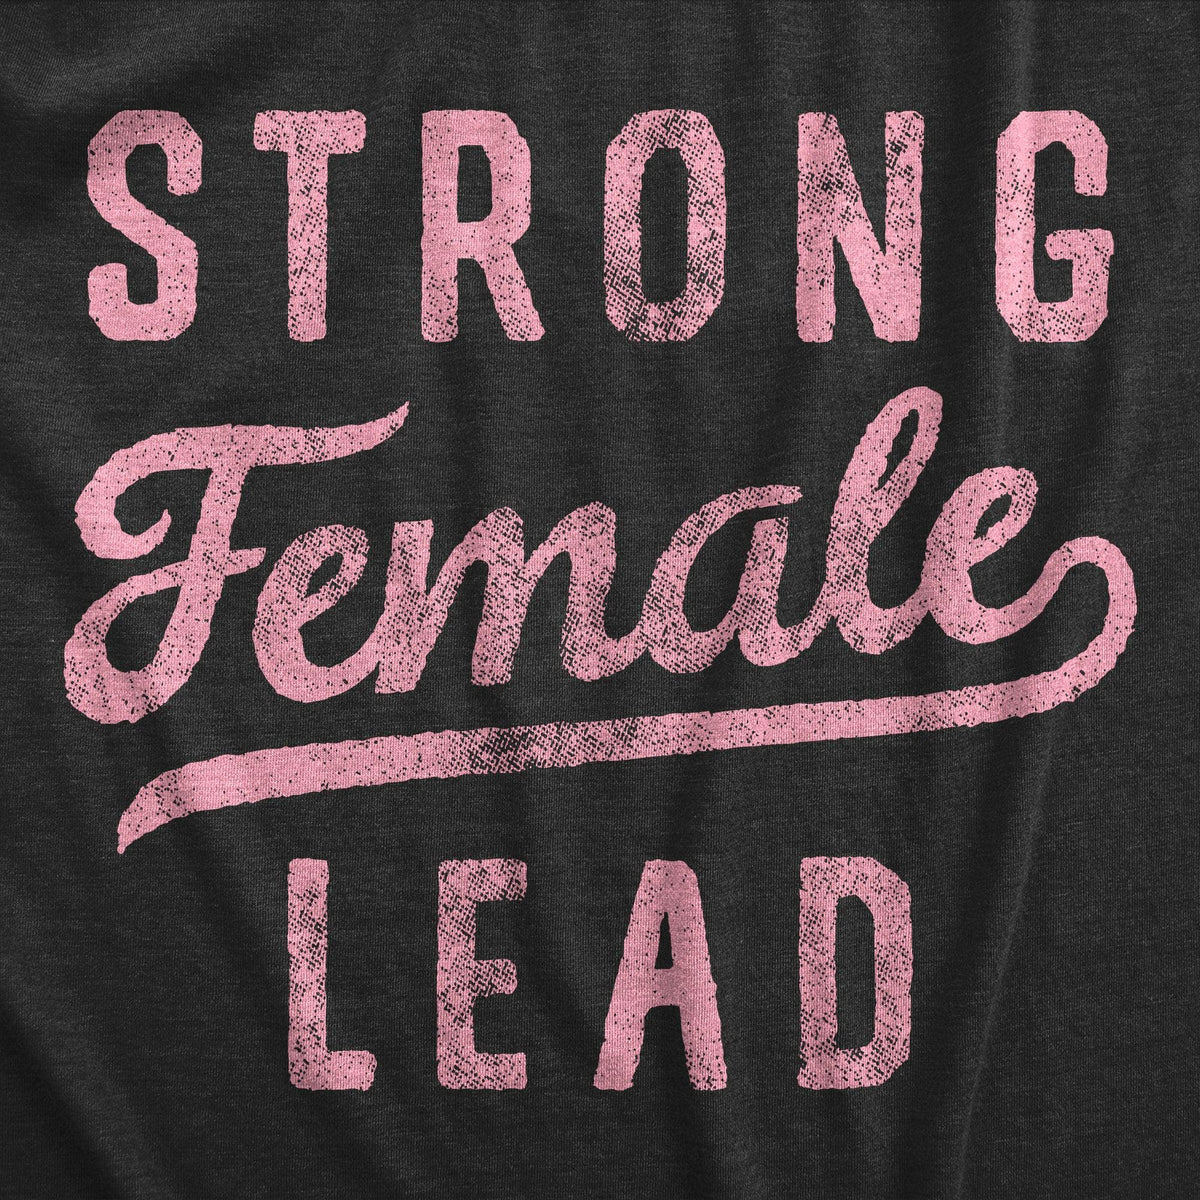 Strong Female Lead Women&#39;s Tshirt  -  Crazy Dog T-Shirts